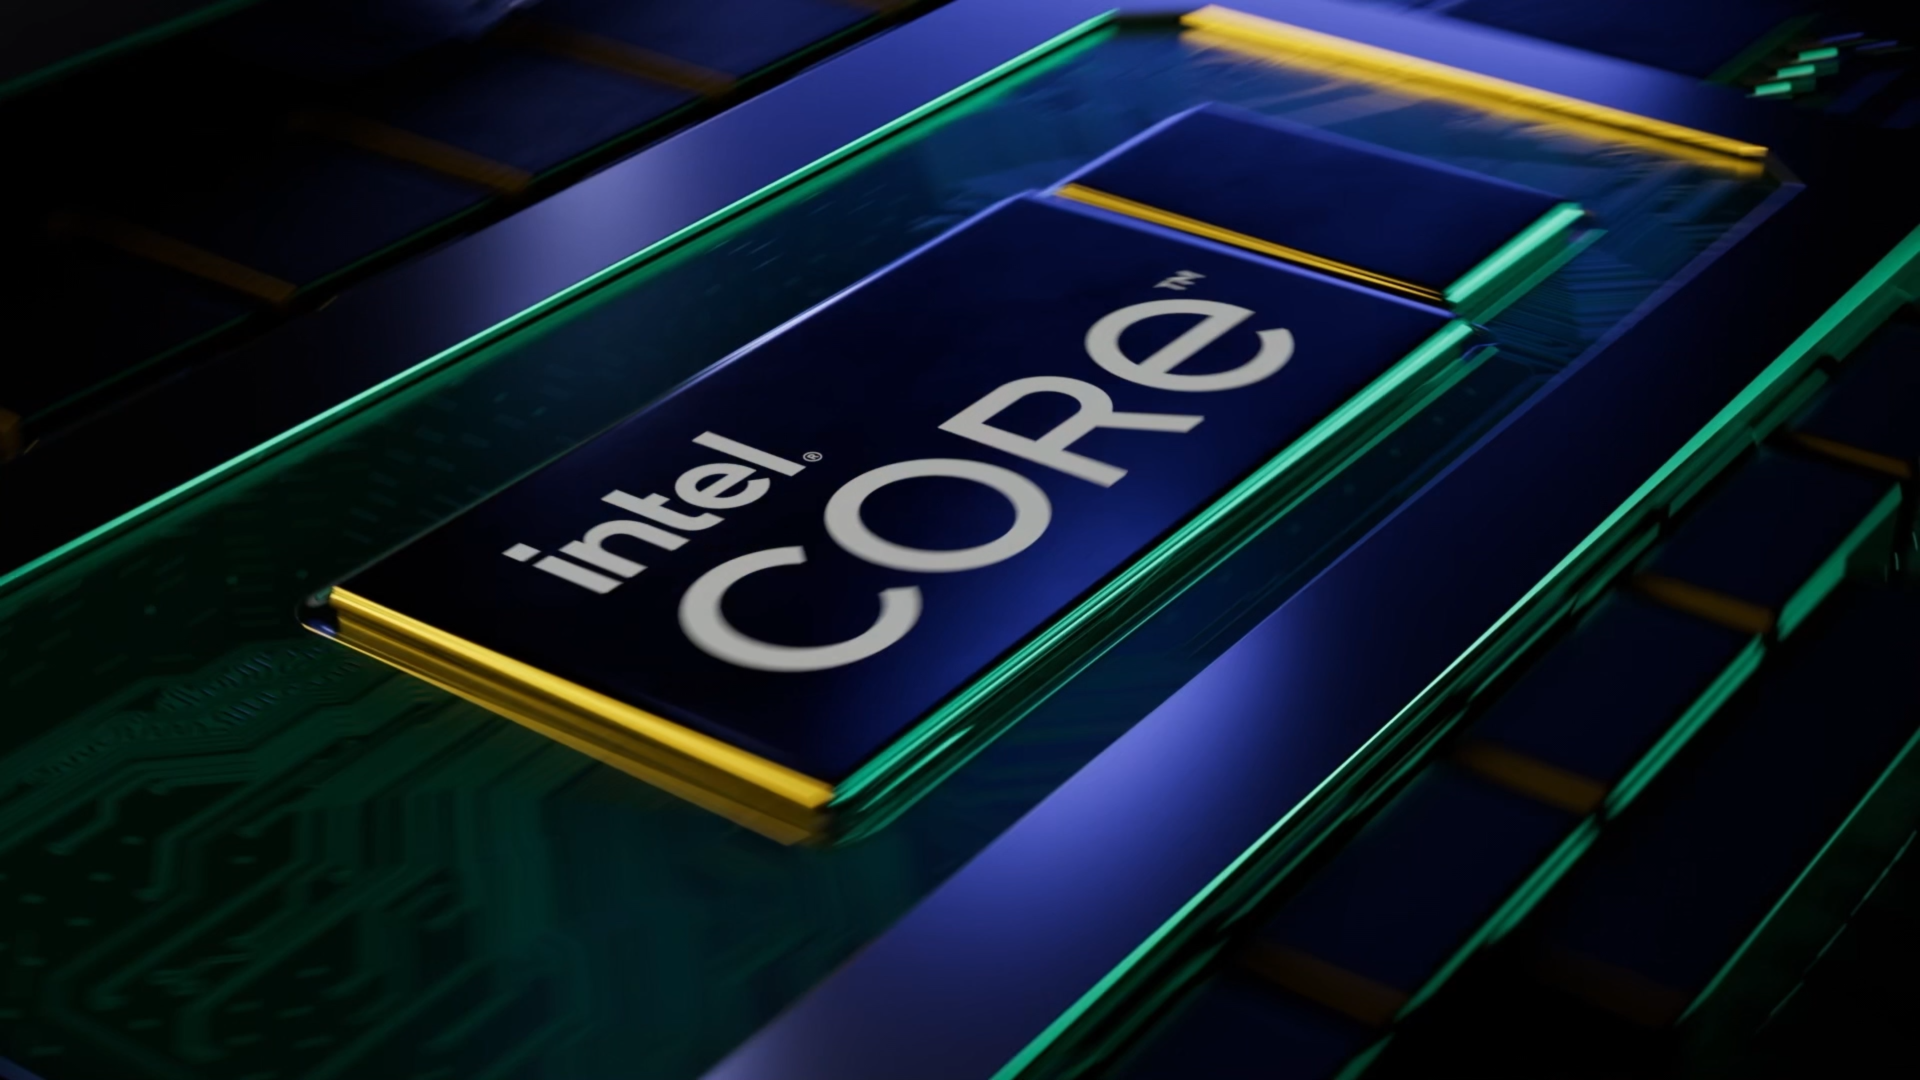 Intel Core i912950HX i712850HX i512600HX Desktop Dies for Laptops  Spotted Over 50 Faster than the Ryzen 9 6900HX  Hardware Times